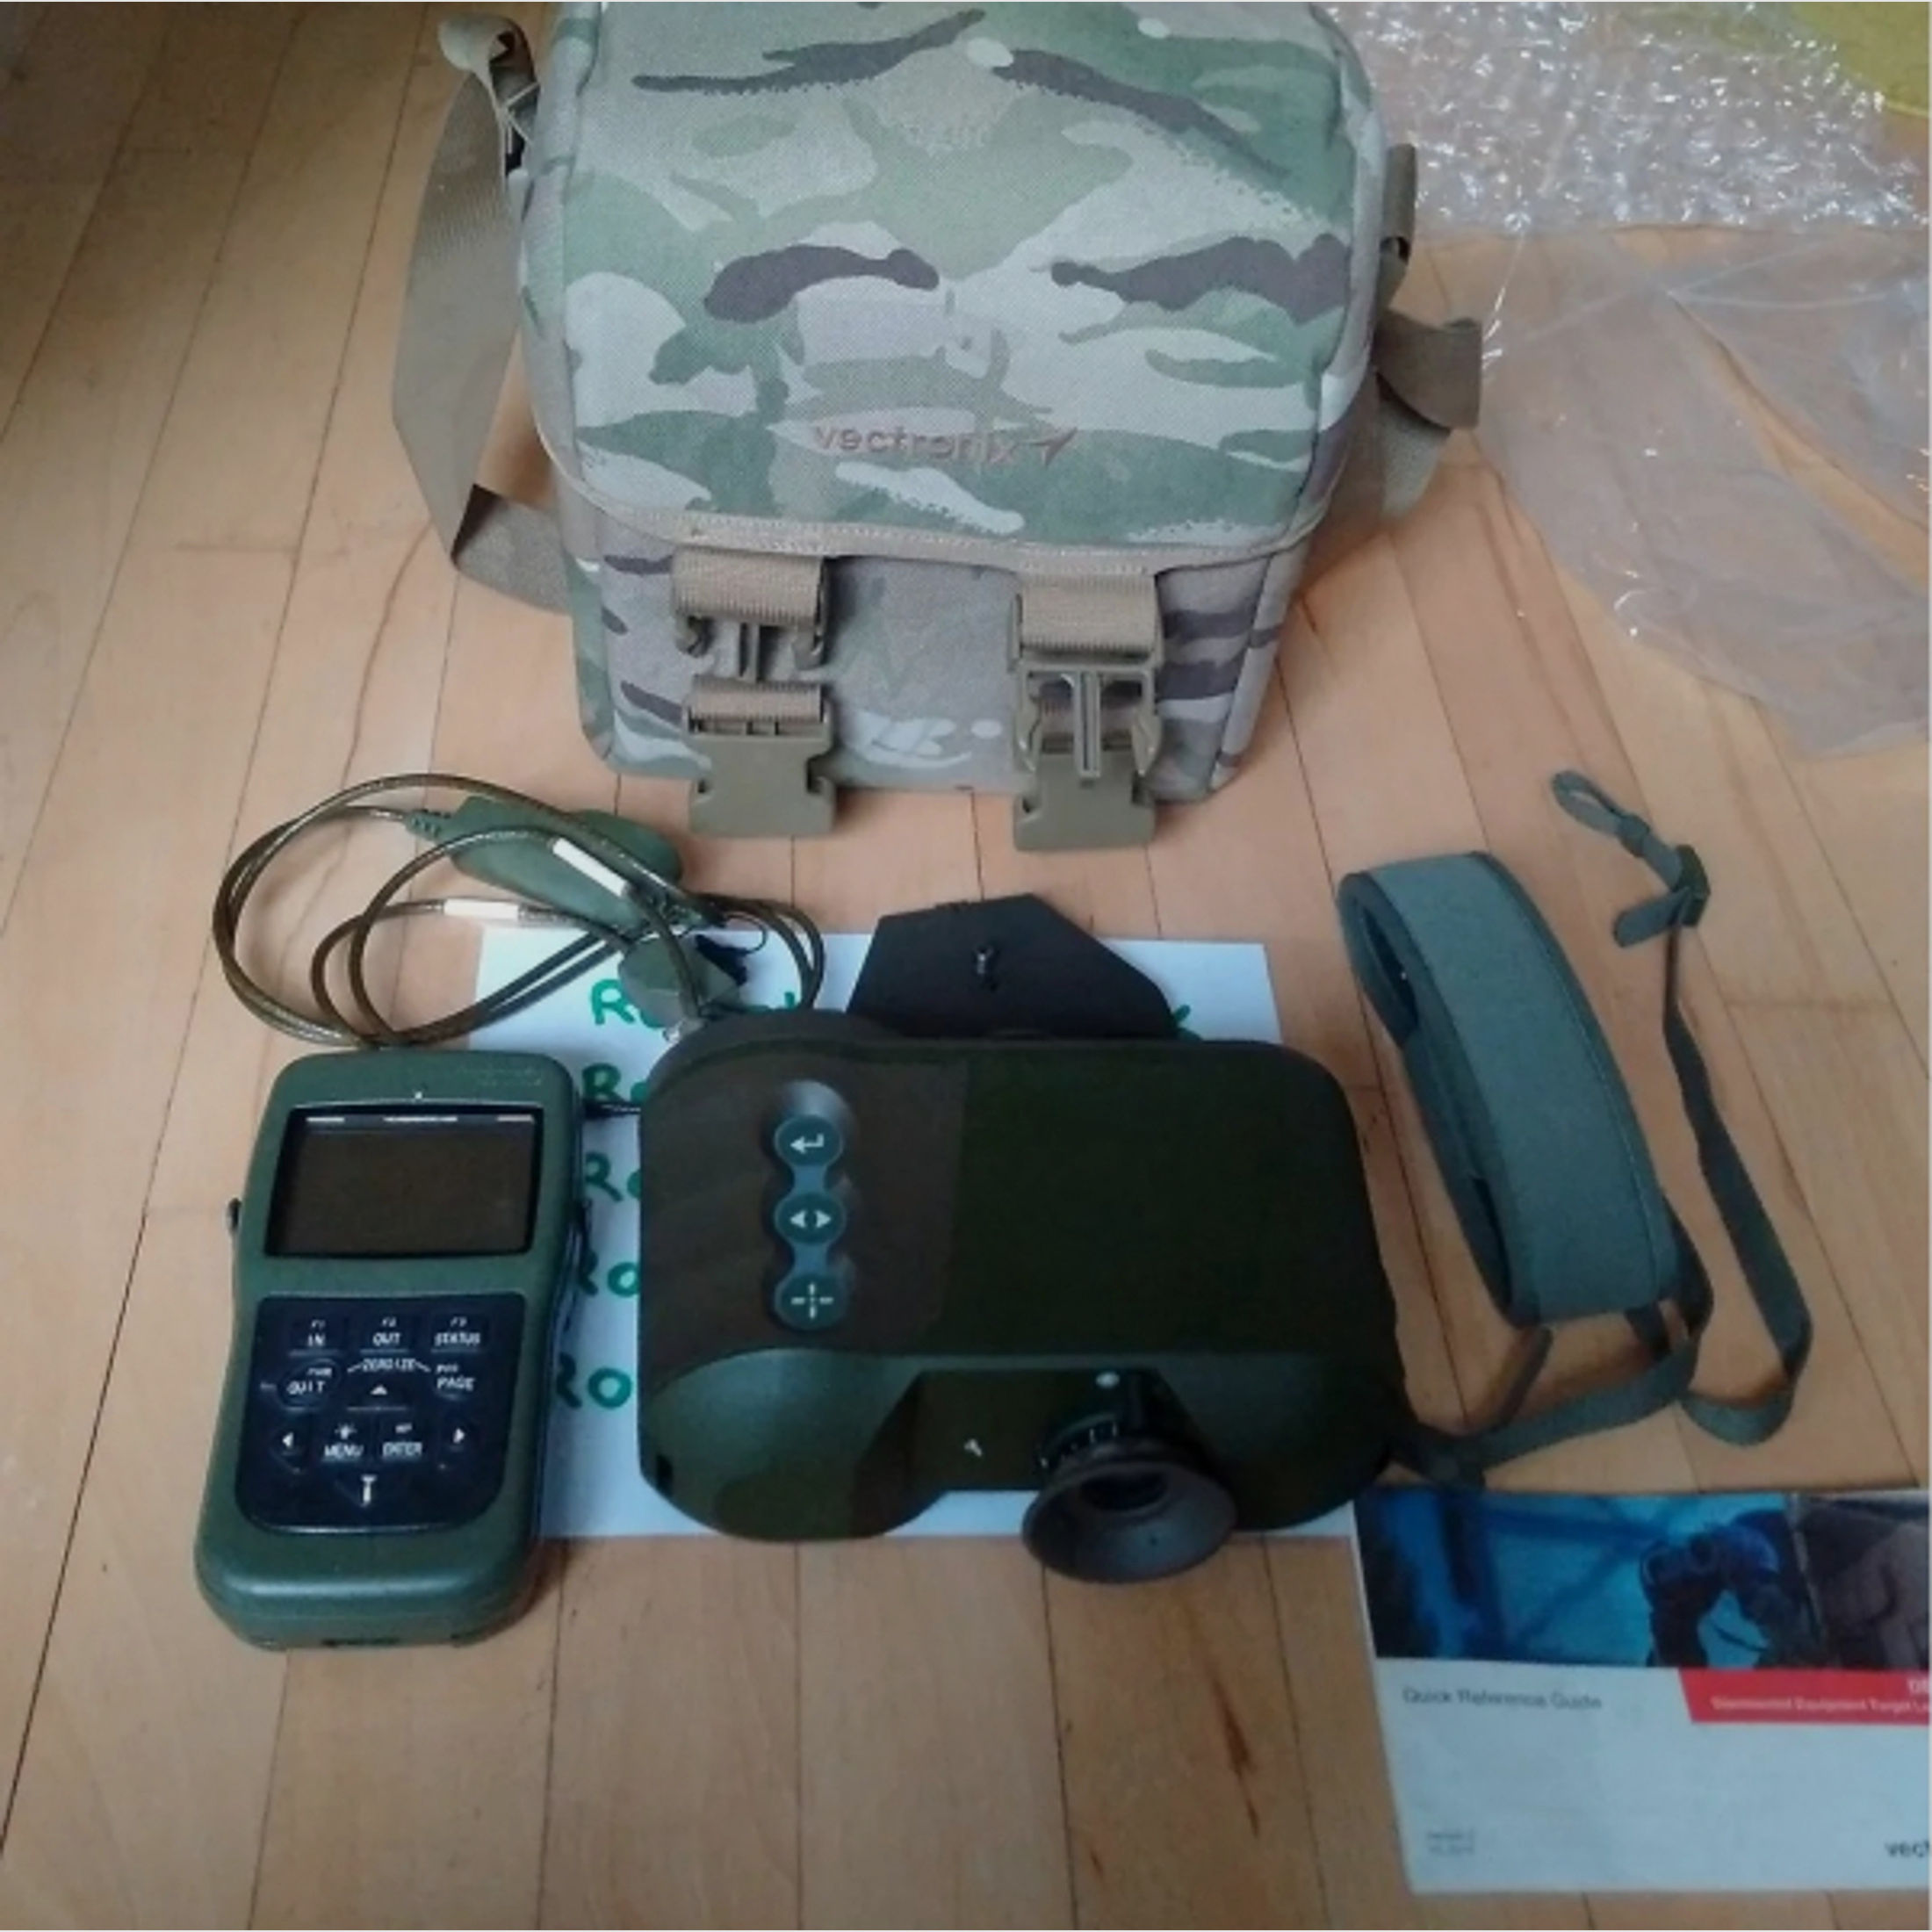 VECTRONIX SAFRAN MOSKITO Photonis XR-5 Night Vision Rangefinder Entfernungsmesser GPS Receiver DAGR